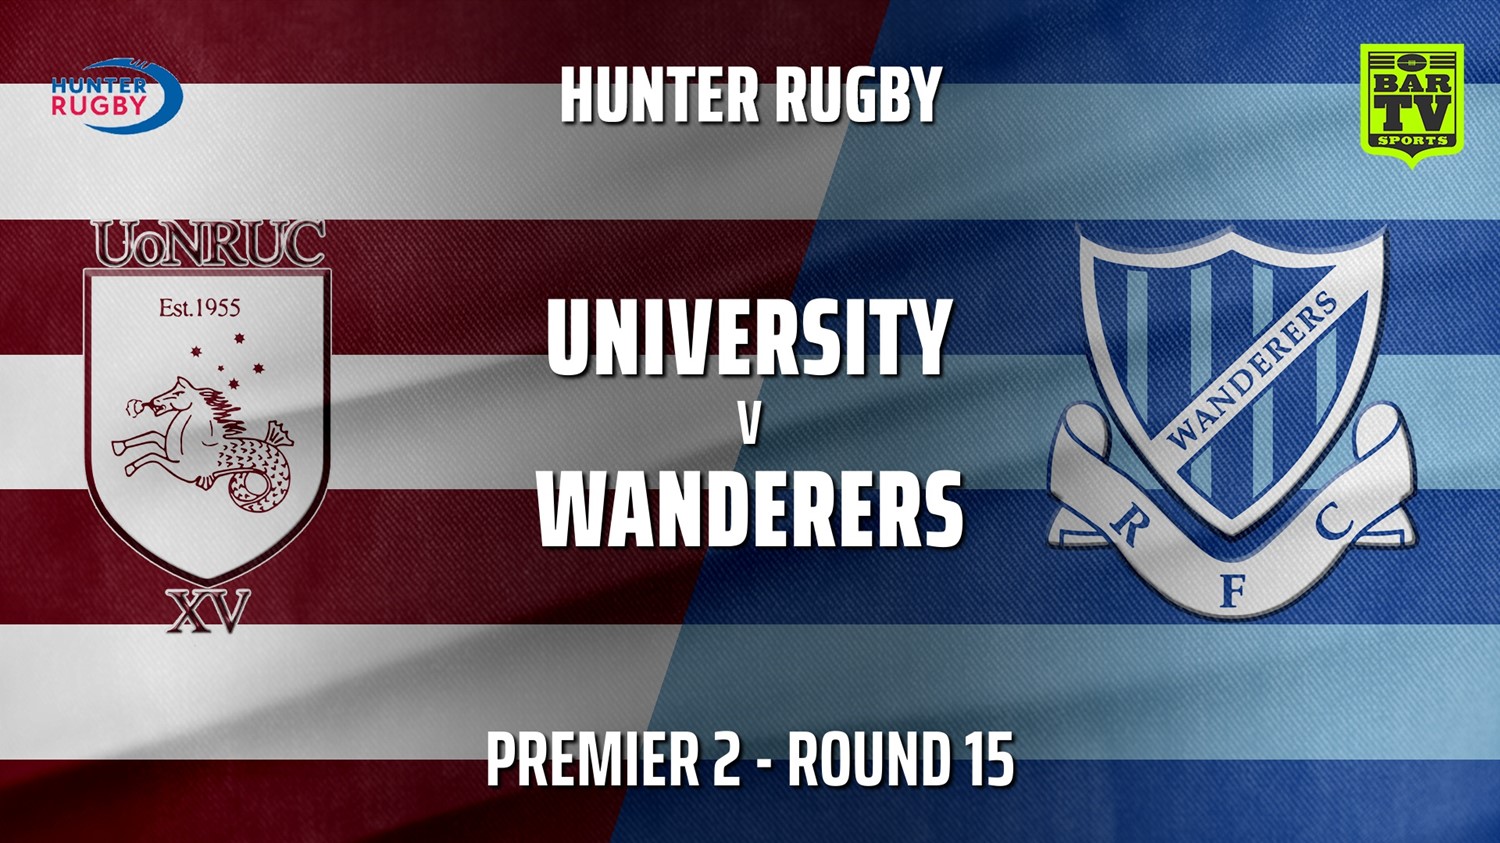 210731-Hunter Rugby Round 15 - Premier 2 - University Of Newcastle v Wanderers Slate Image